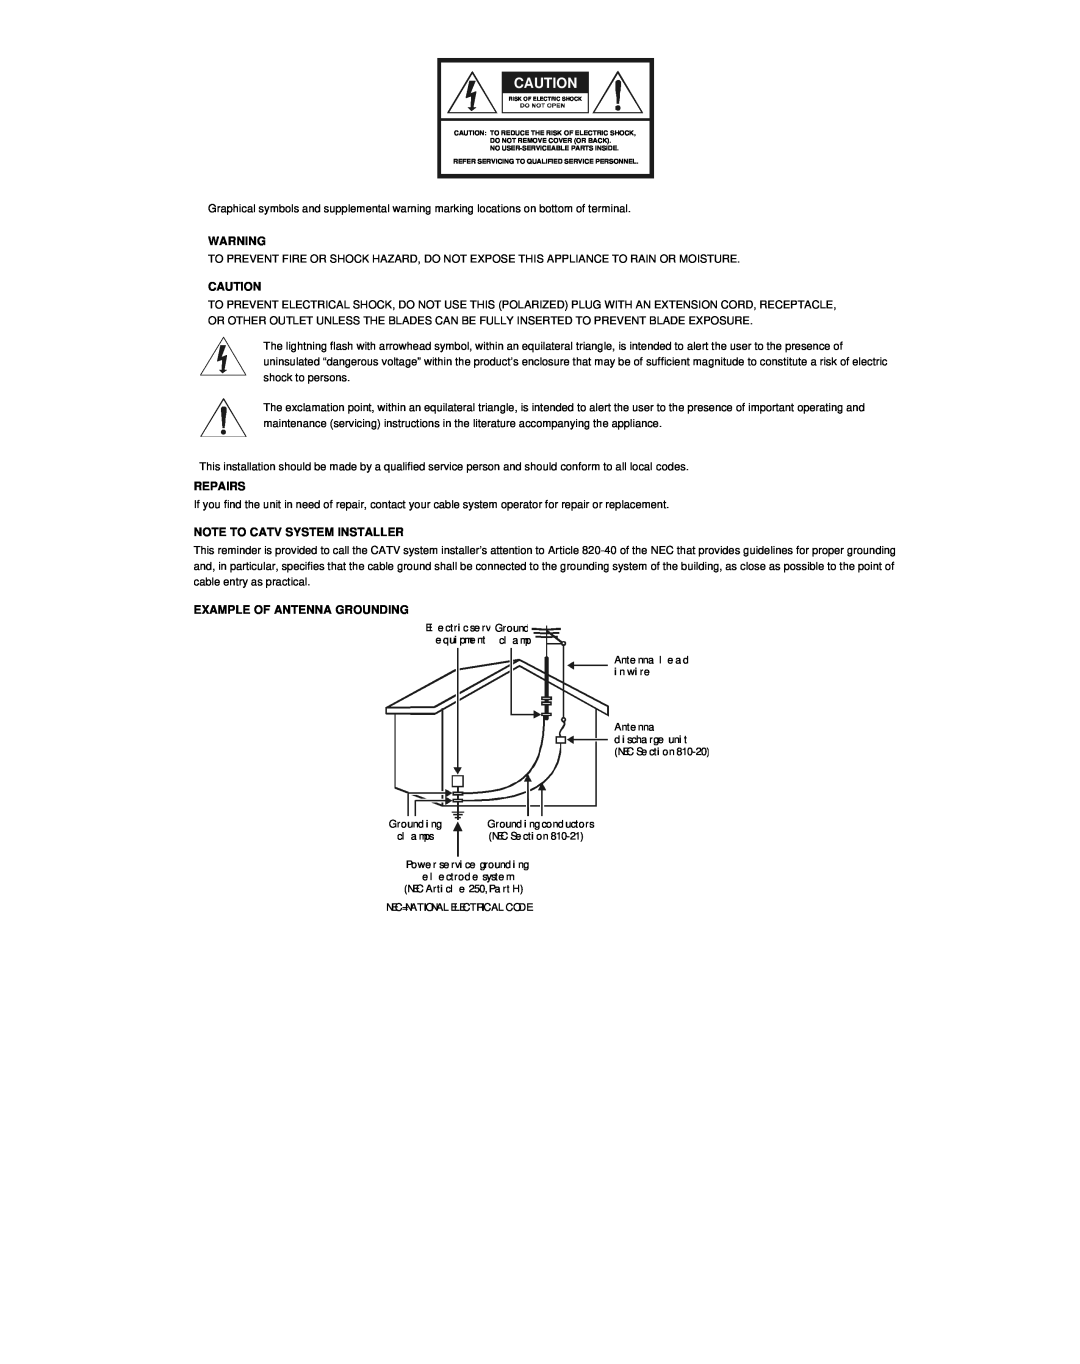 Motorola DCP501 manual Repairs, Note To Catv System Installer, Example Of Antenna Grounding 